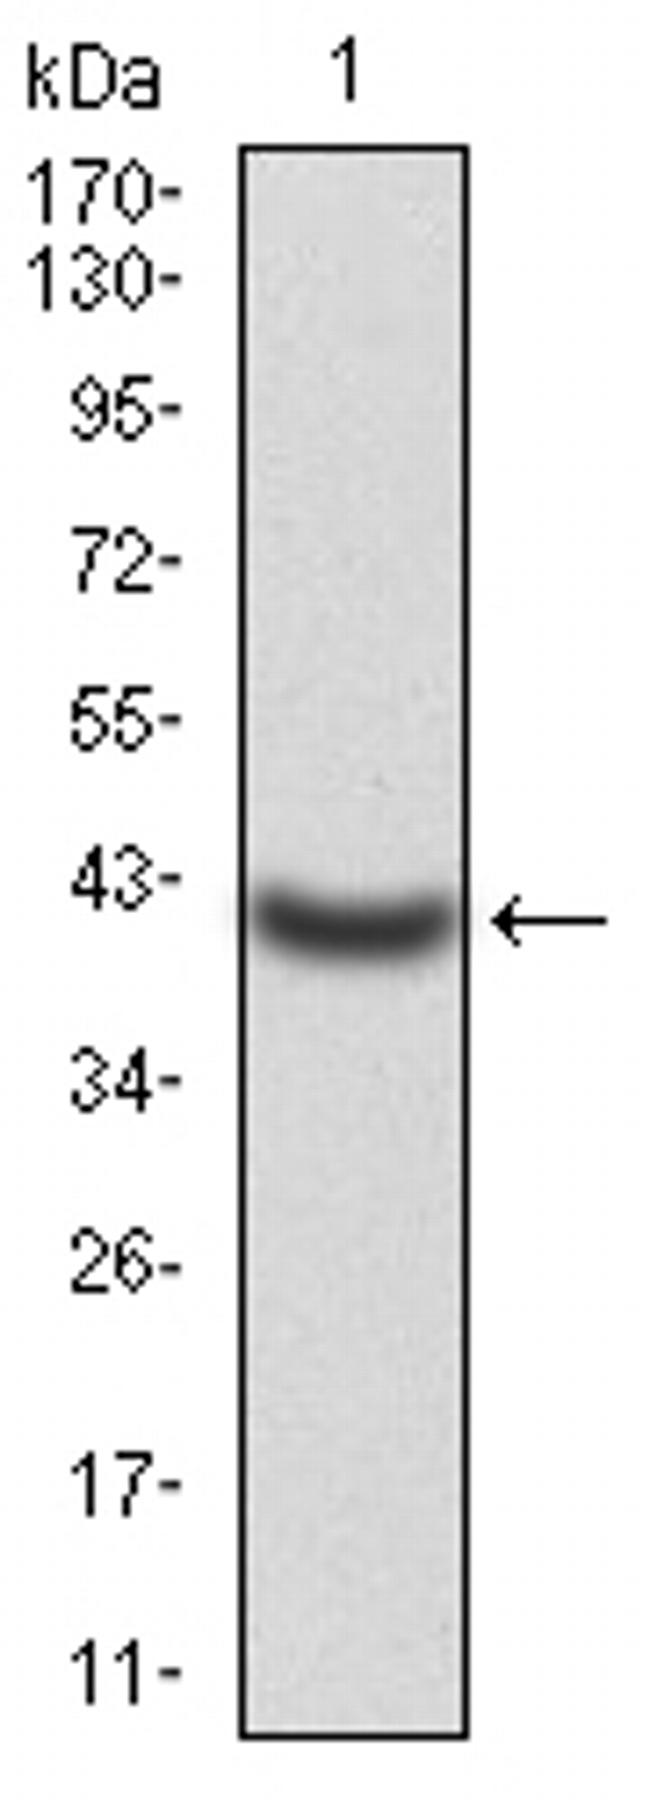 KV4.2 (KCND2) Antibody in Western Blot (WB)